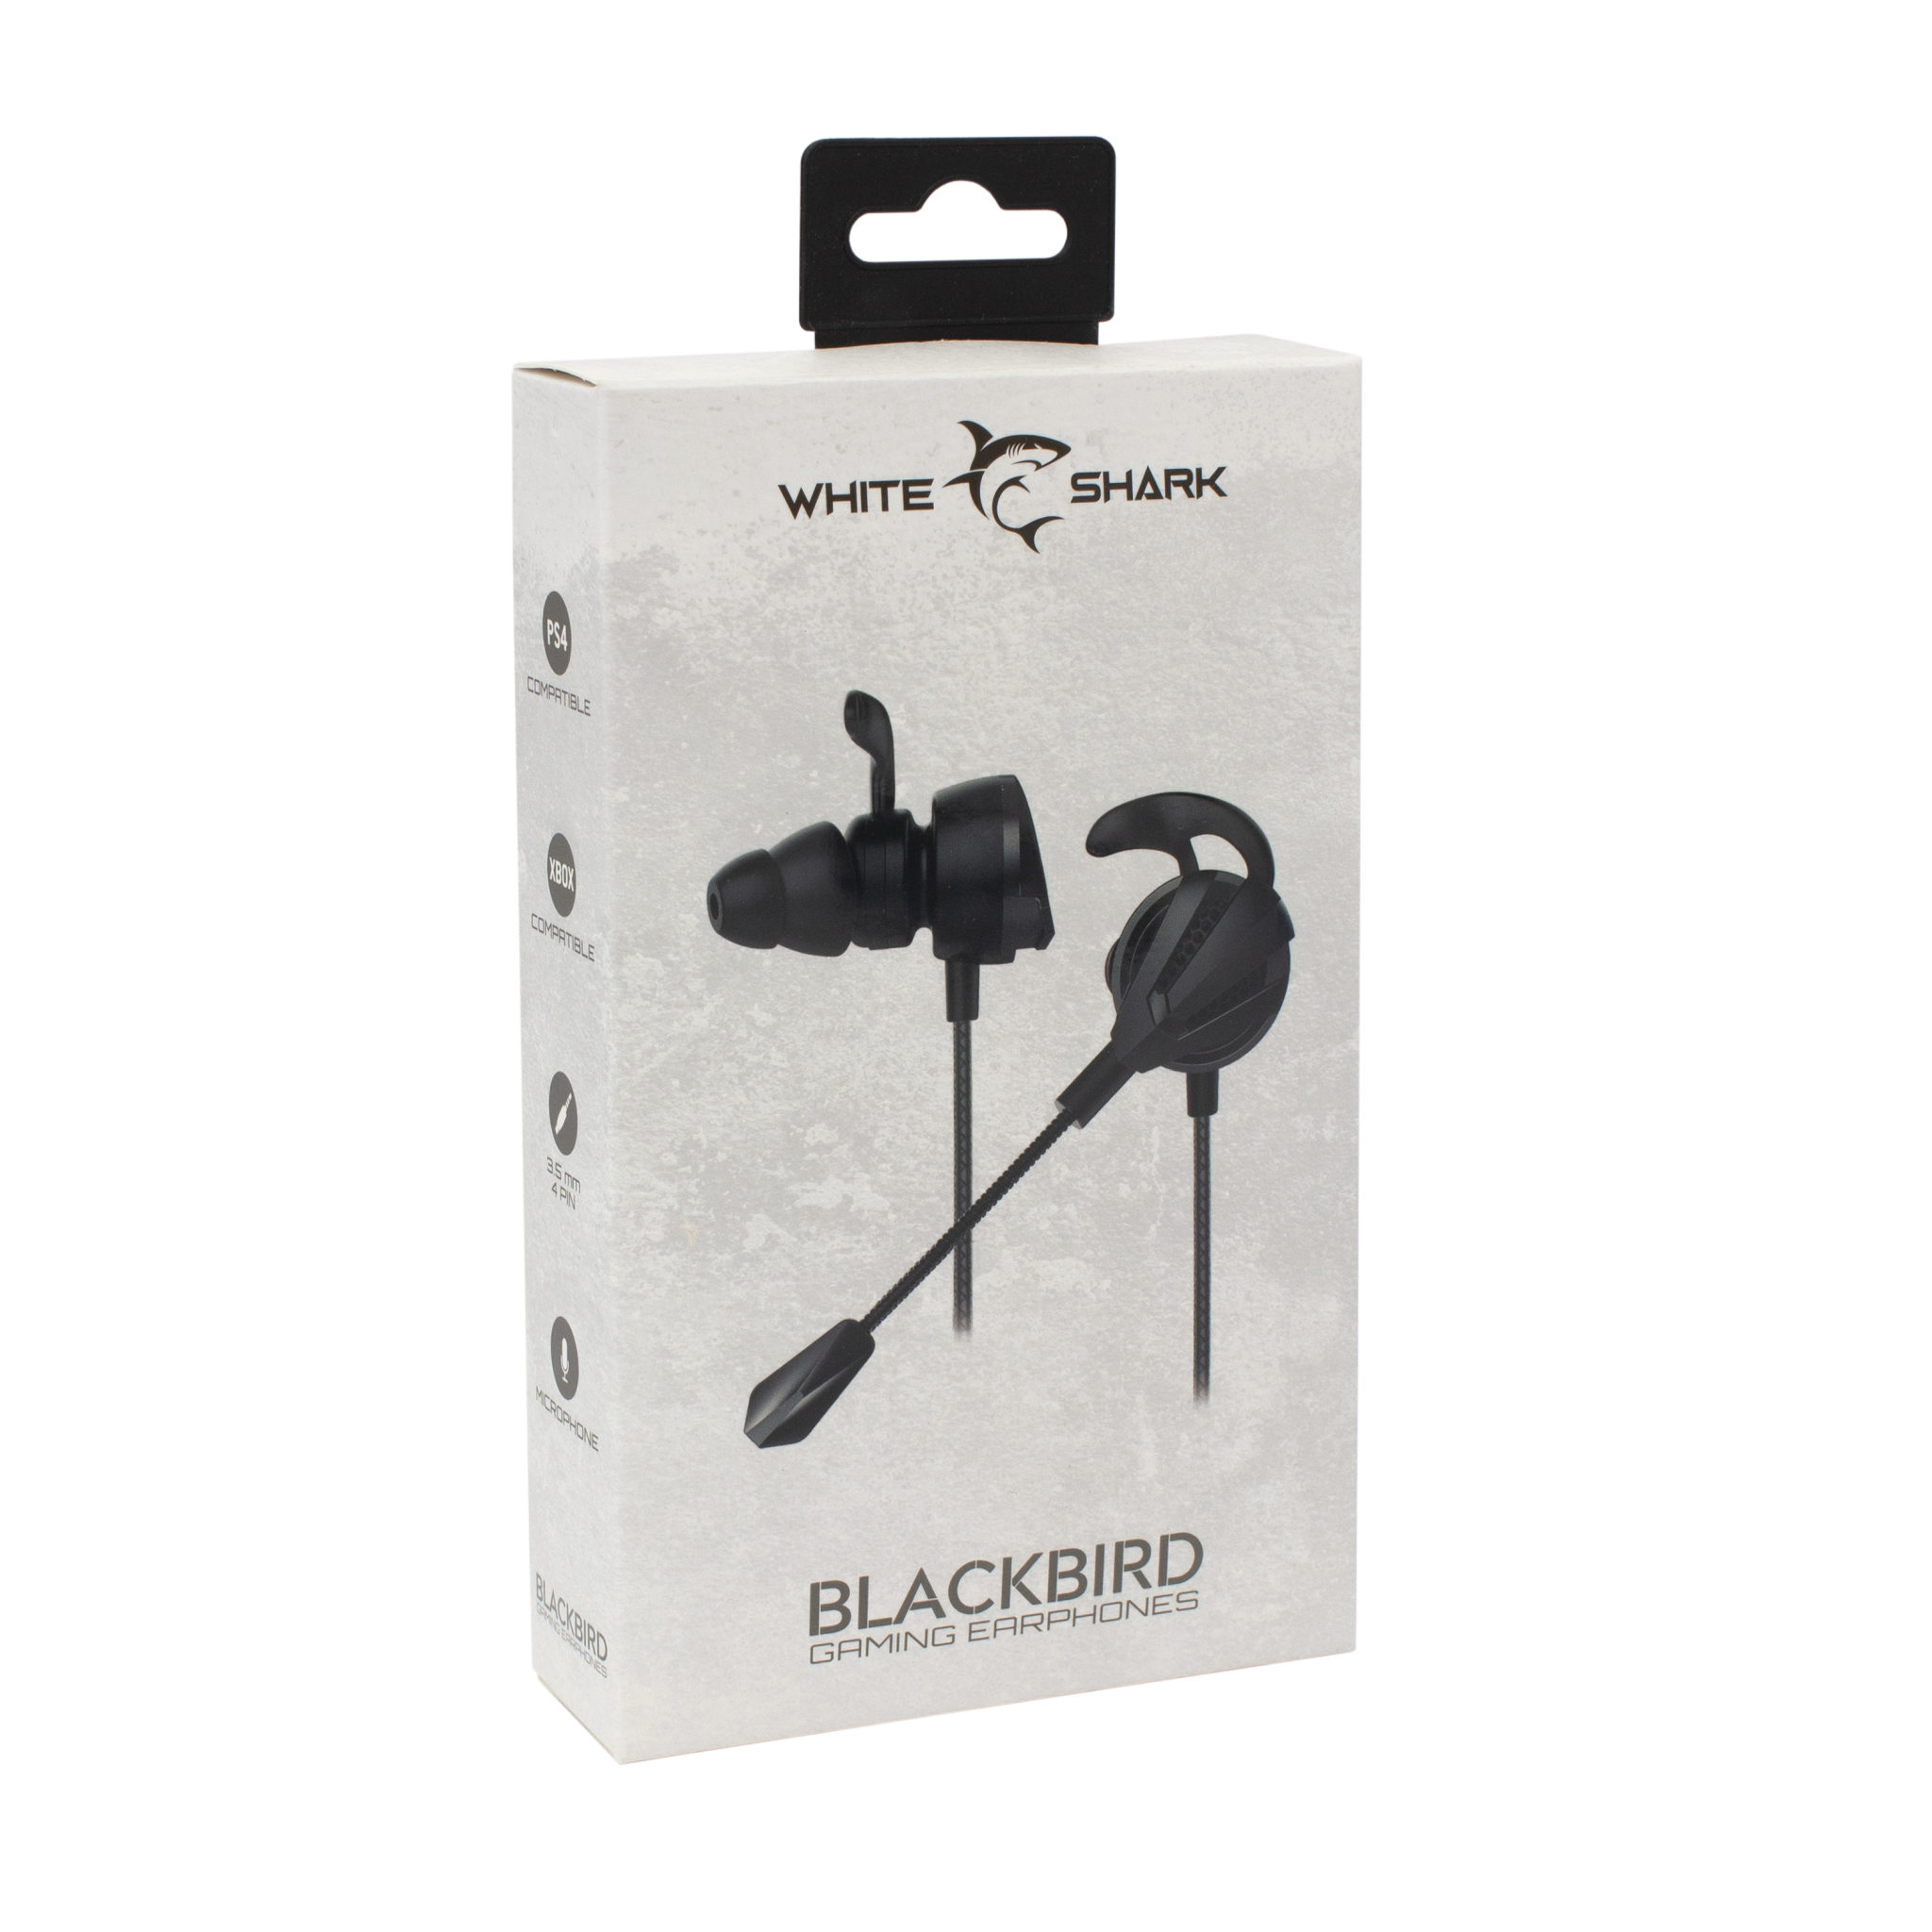 Casti in-Ear White Shark BlackBird cu Microfon detasabil, Stereo, 3.5 mm stereo Jack, Omnidirectional, Negru